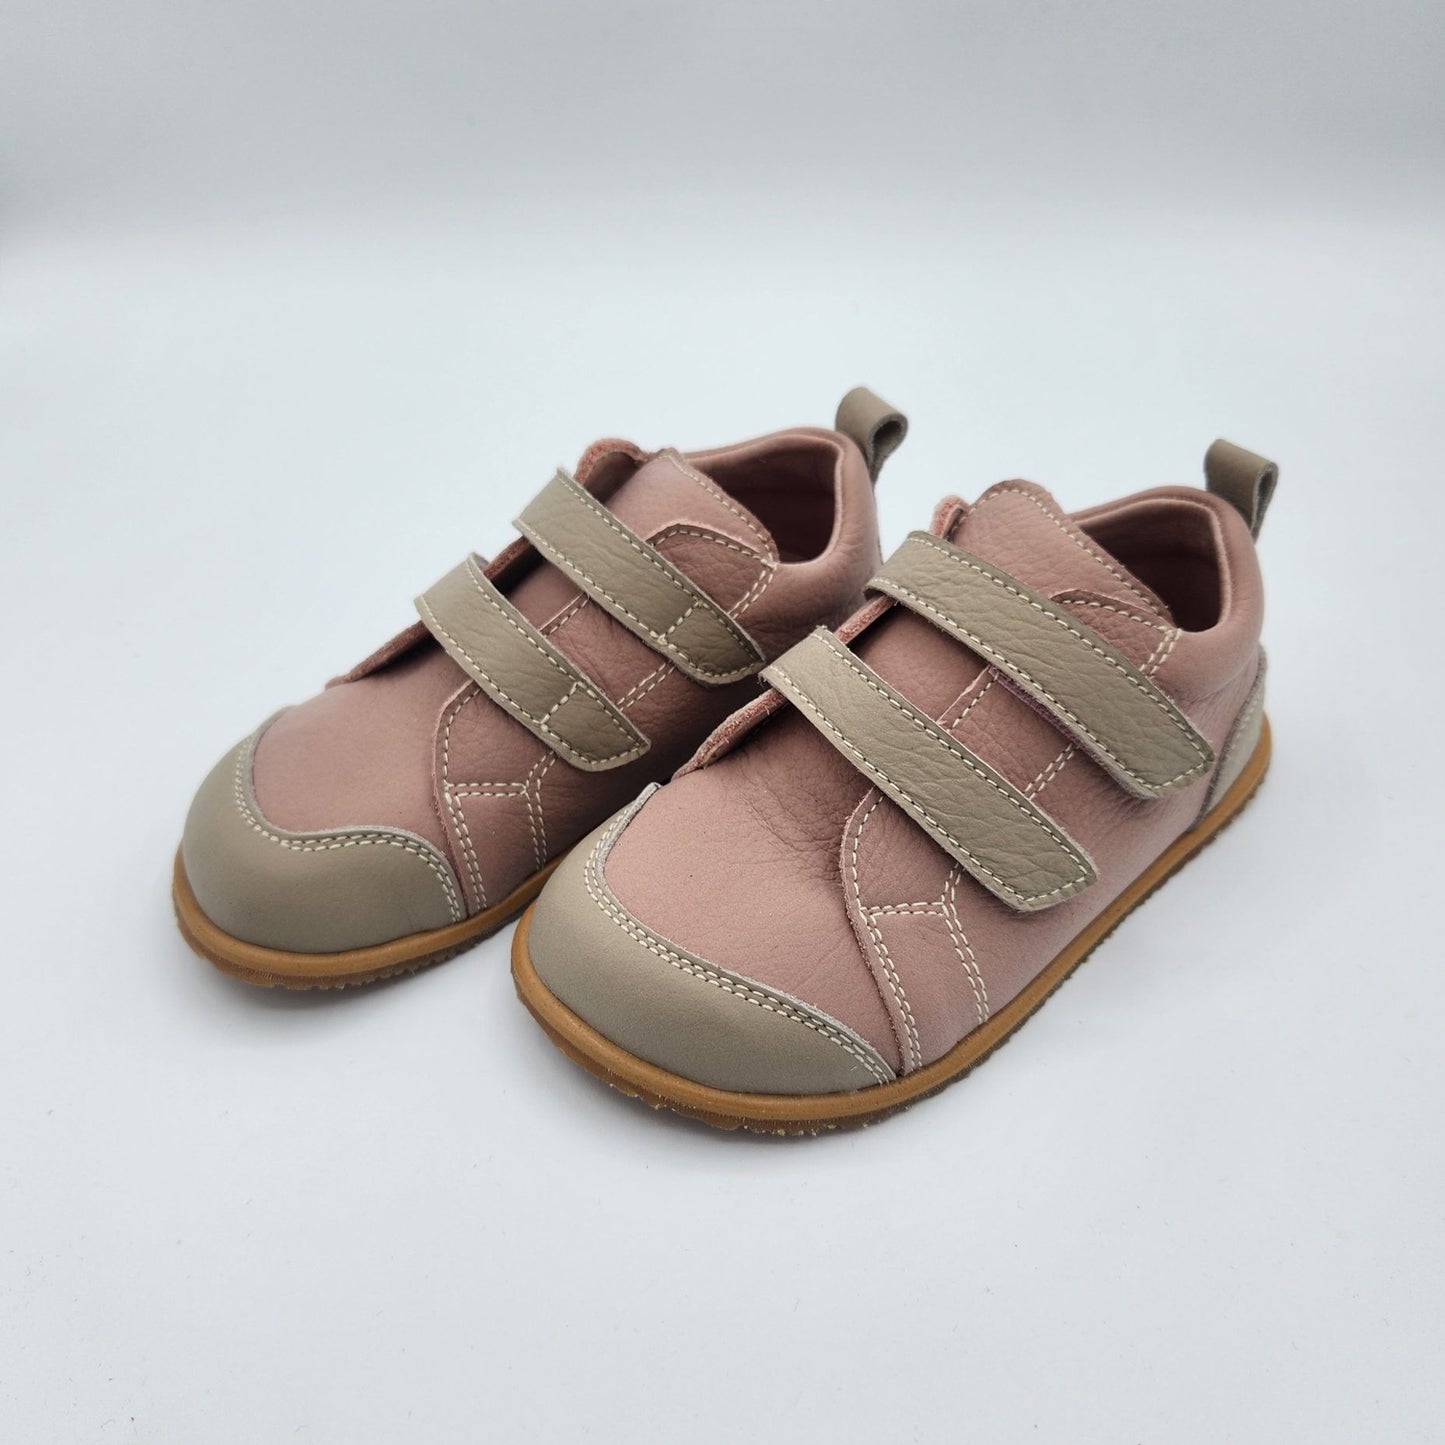 Calzado semi bota Dispares - Mapachitos Pink Dust